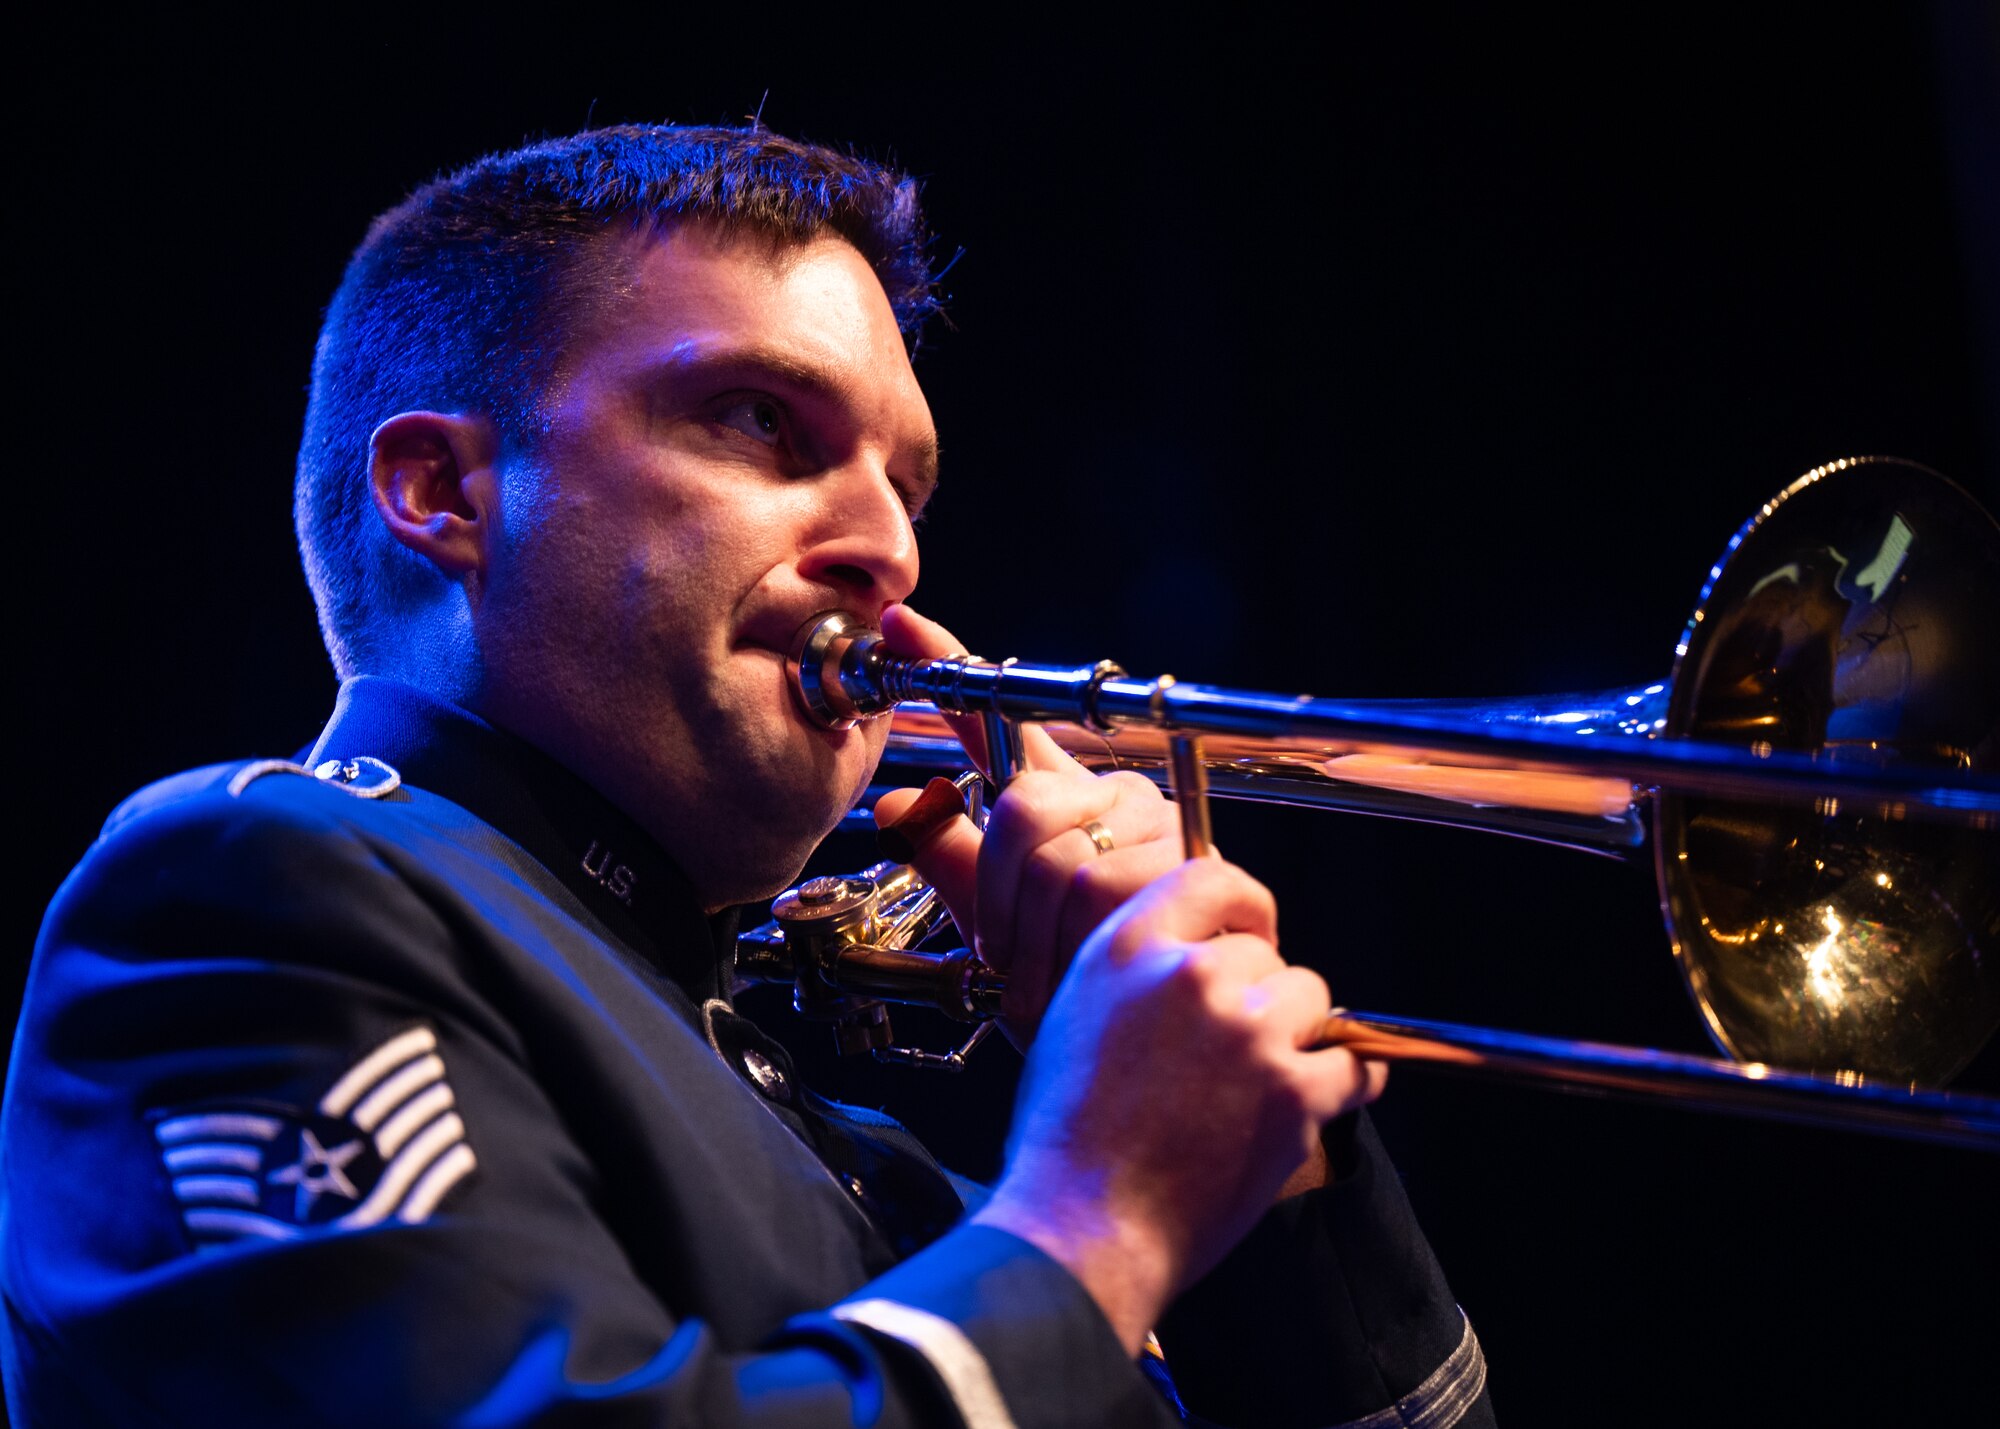 Airman plays trombone on stage